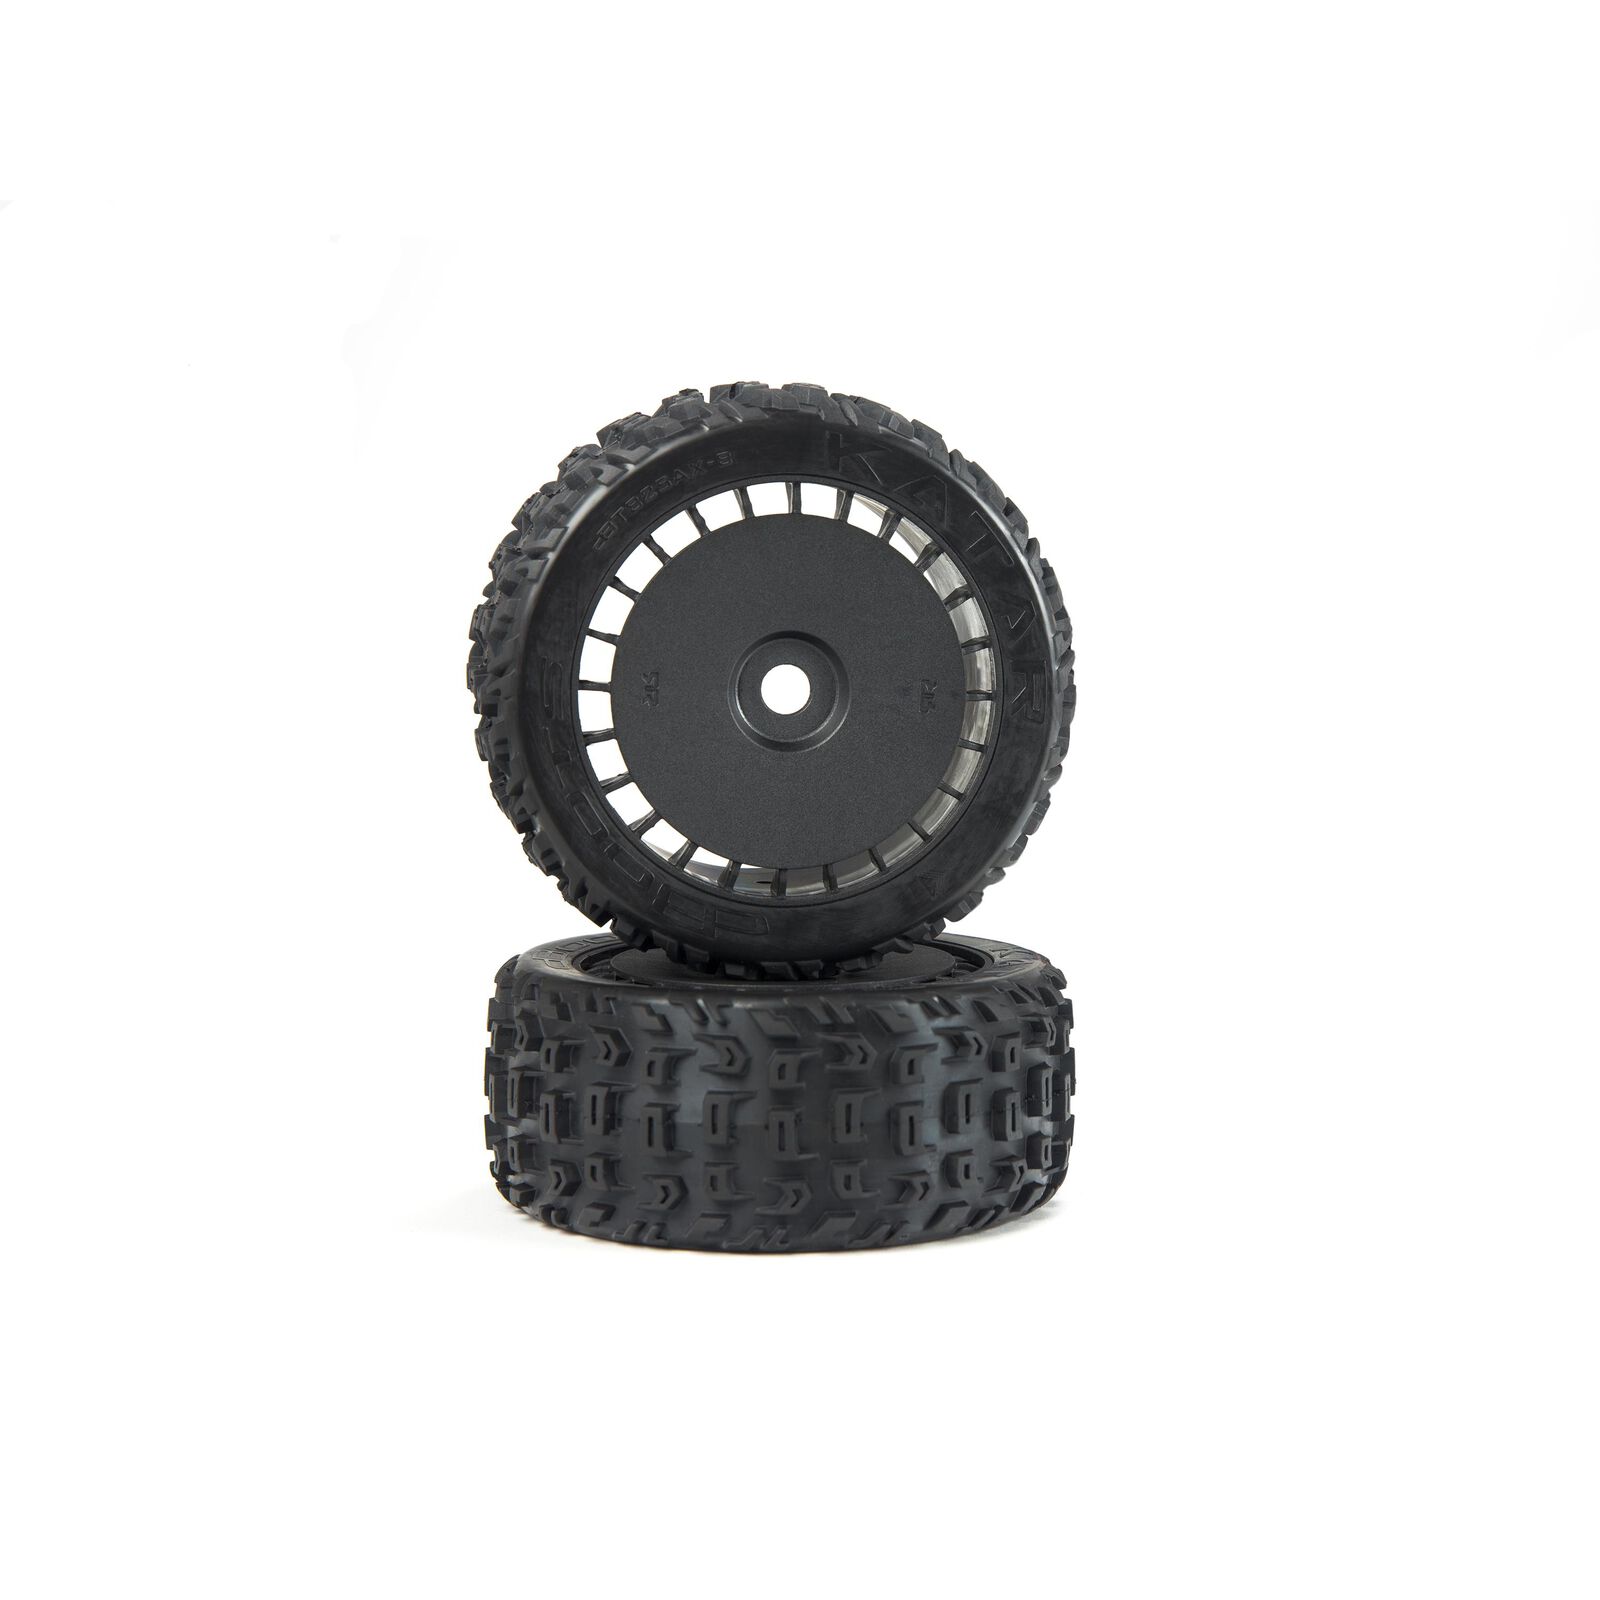 dBoots Katar T Belted 6S Tire Set Glued (Blk) (2)